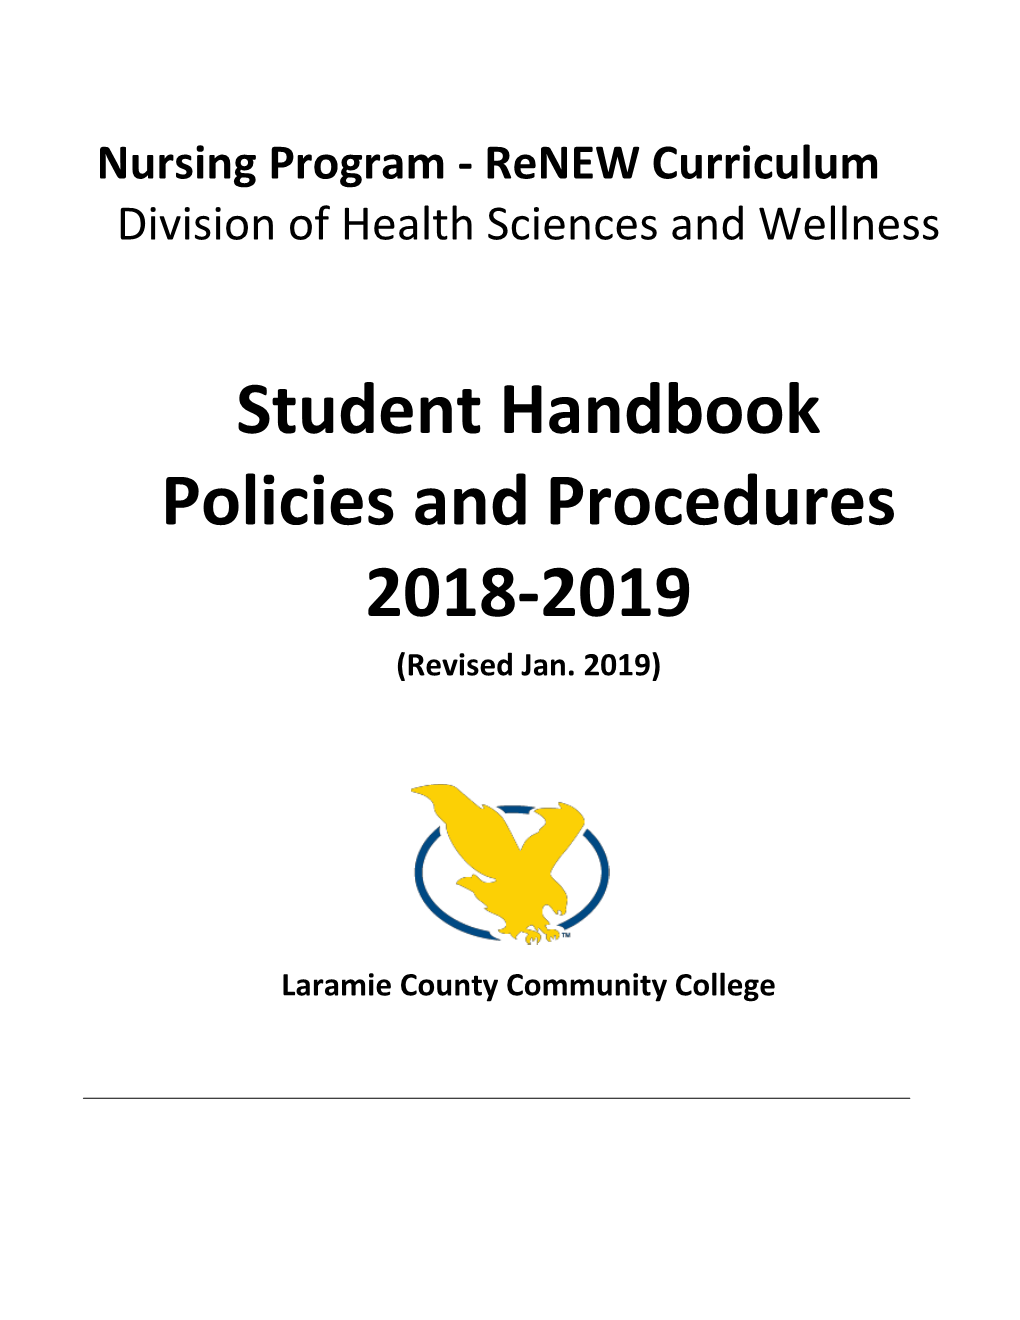 Student Handbook Policies and Procedures 2018-2019 (Revised Jan